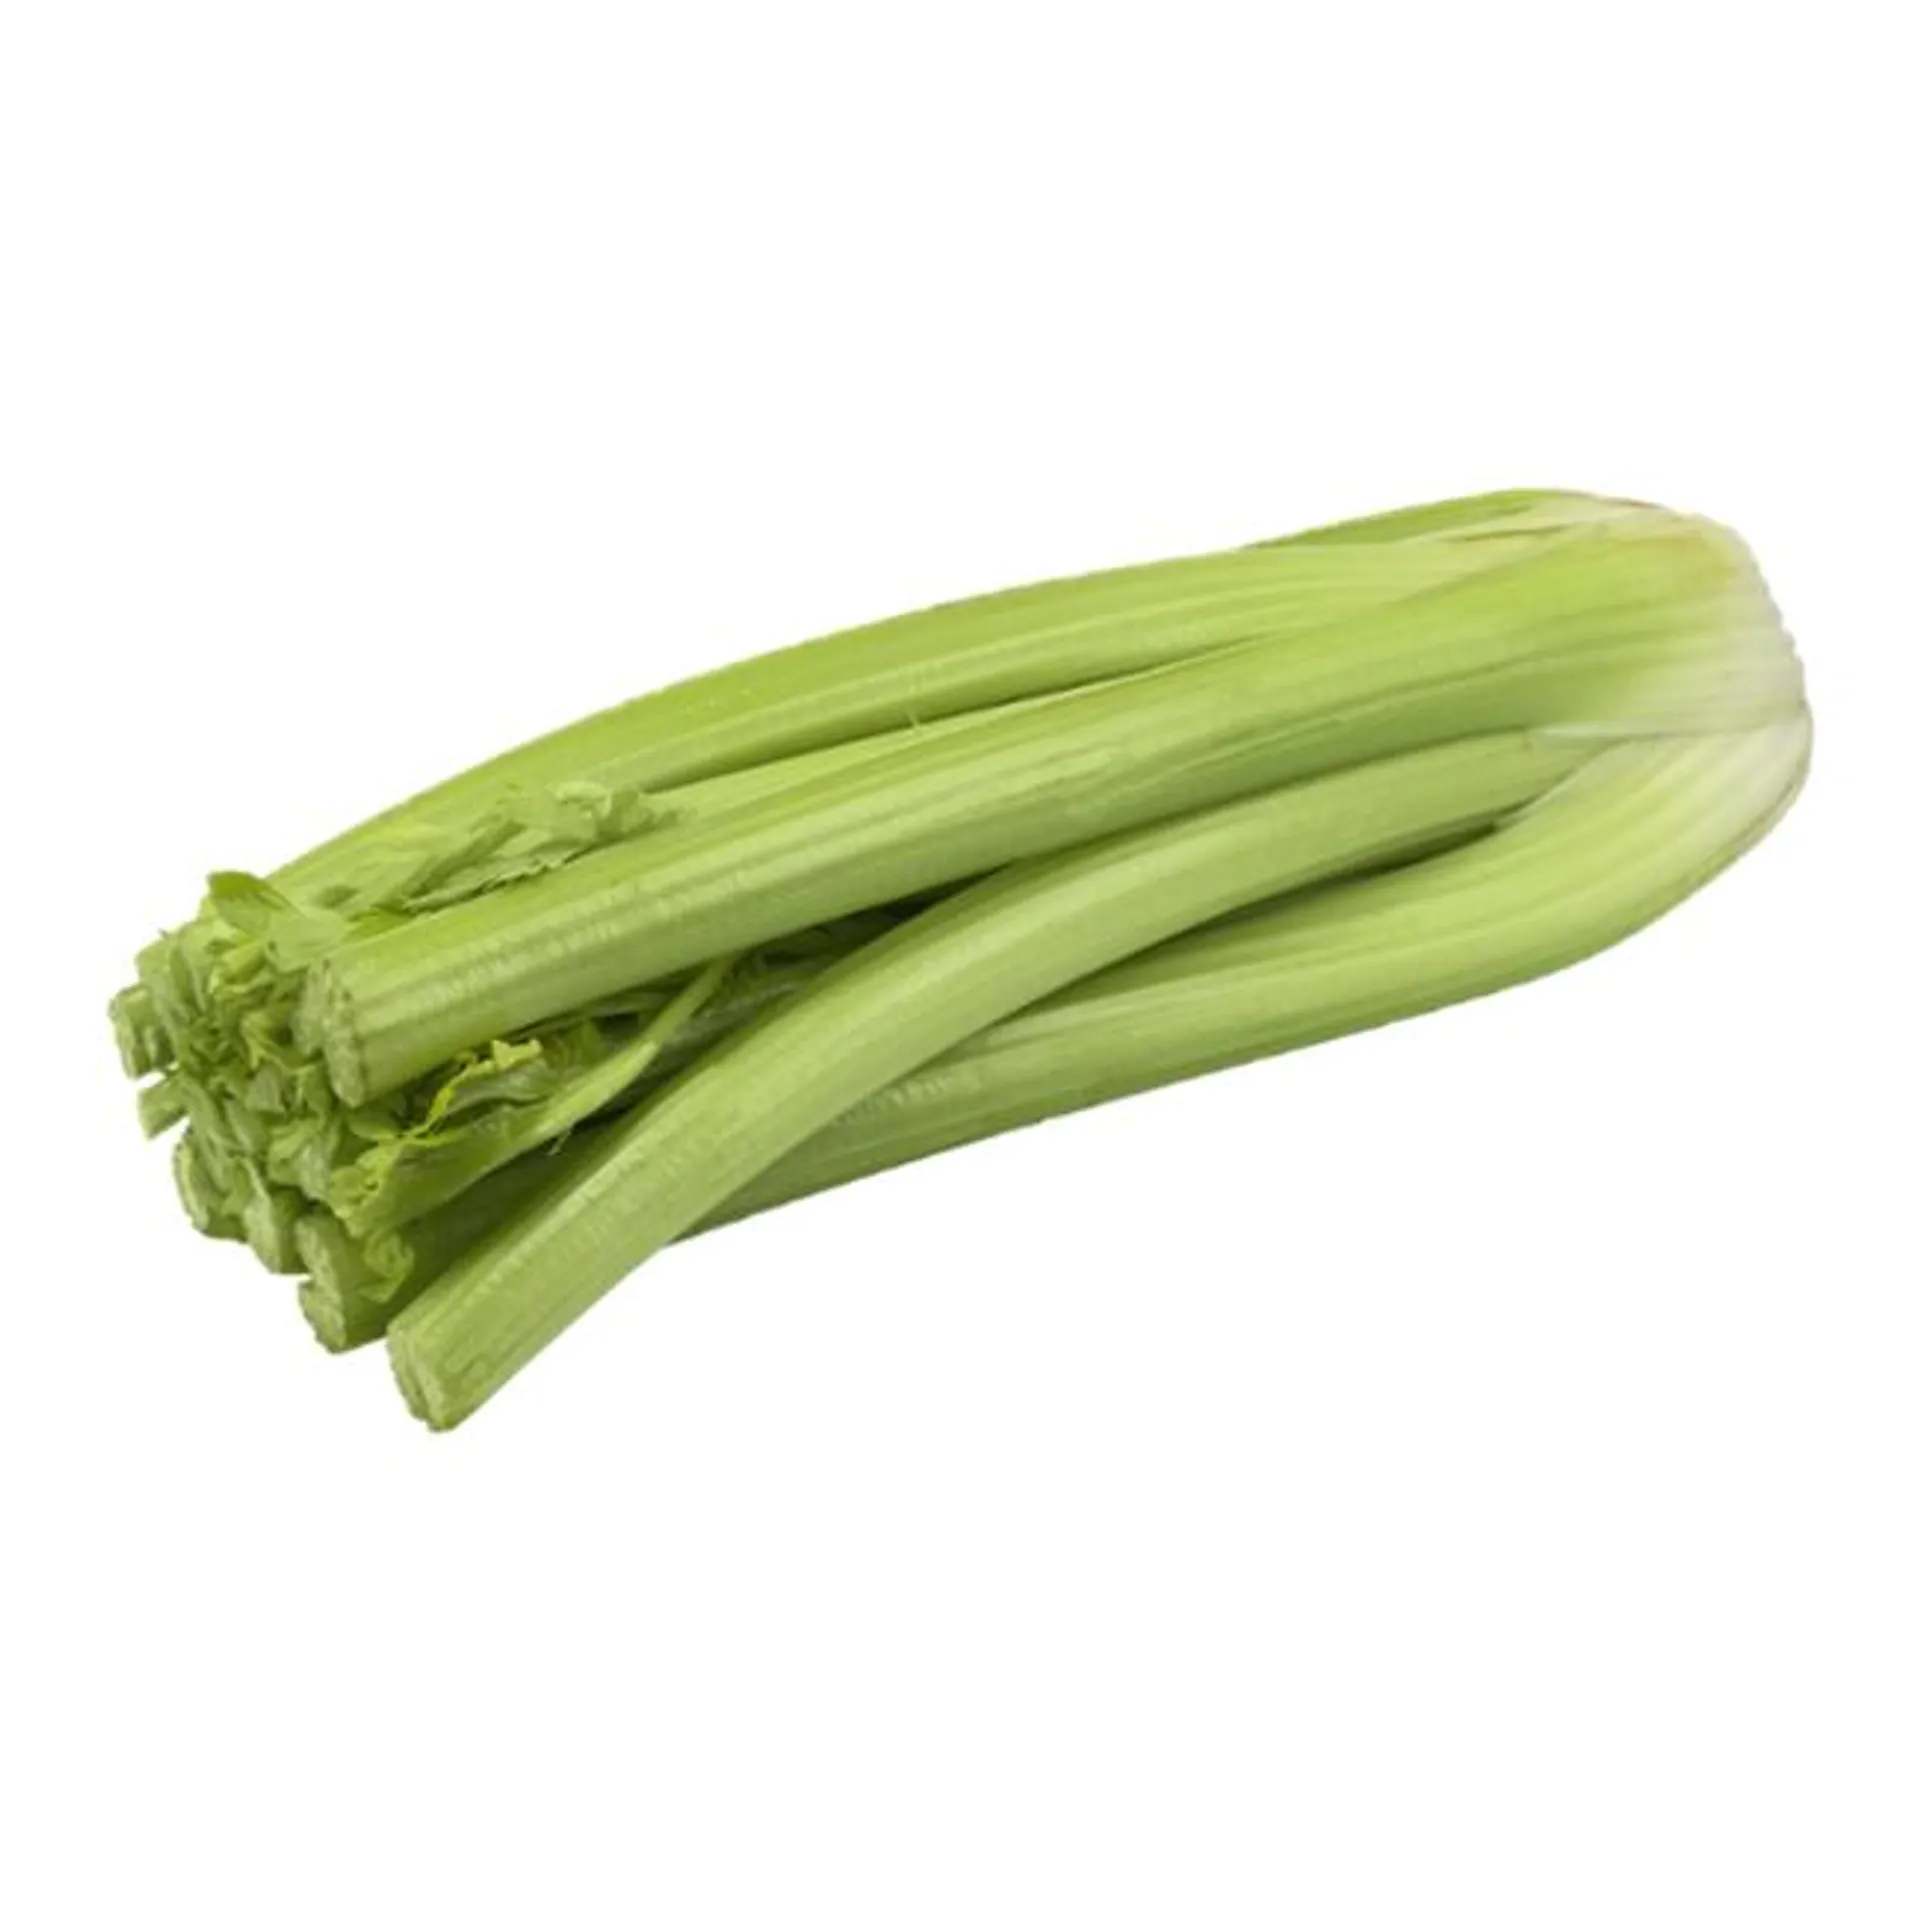 Celery - Bunch